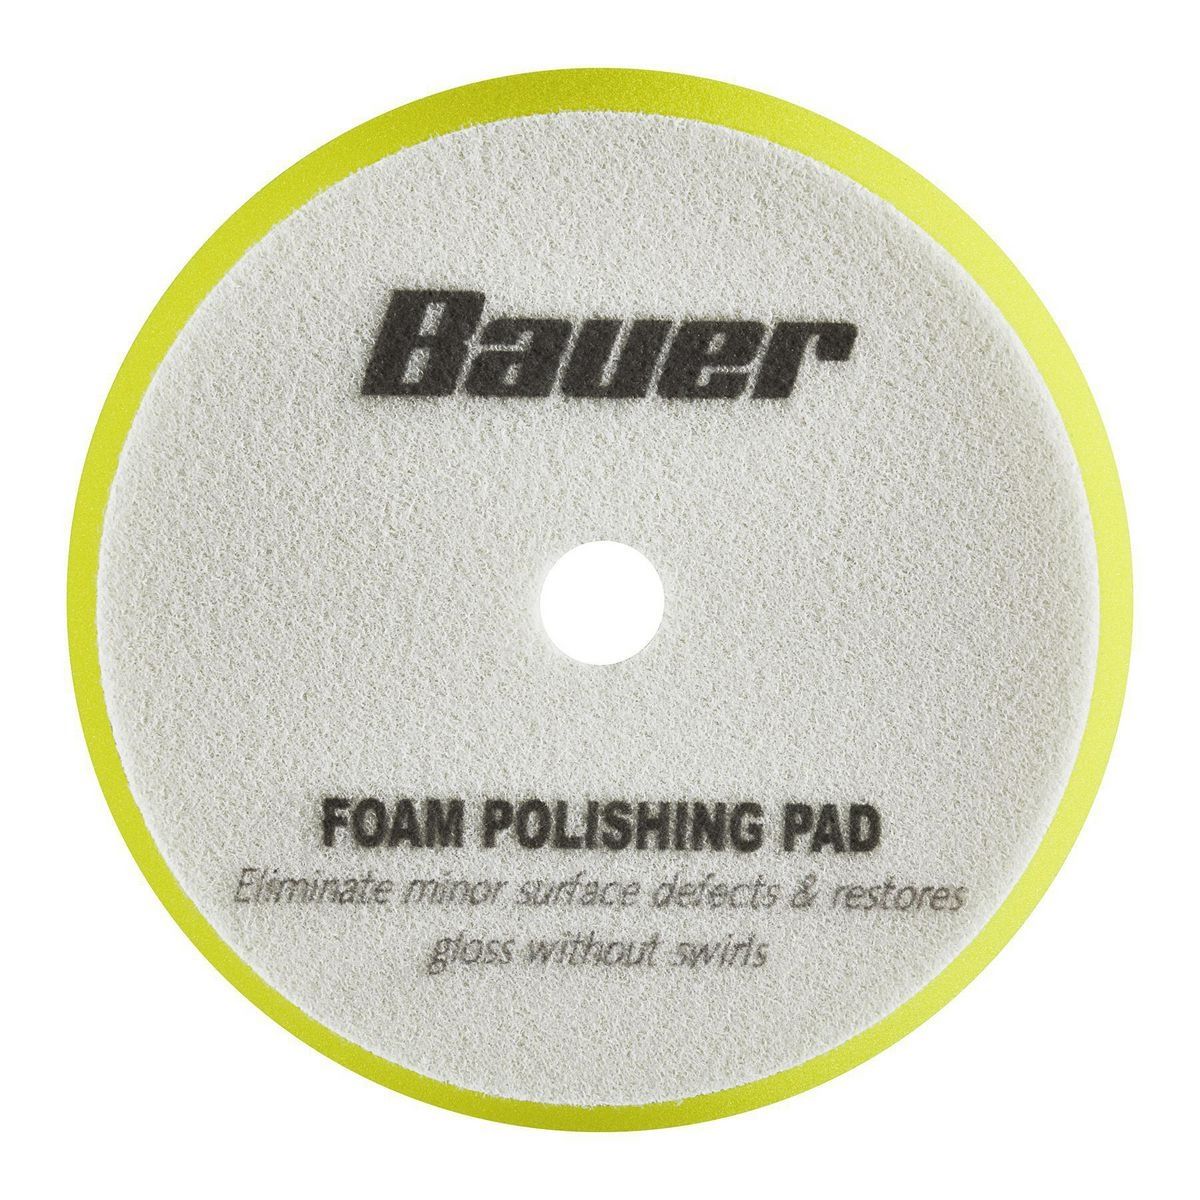 BAUER 7 in. Fine Foam Polishing Pad - Yellow